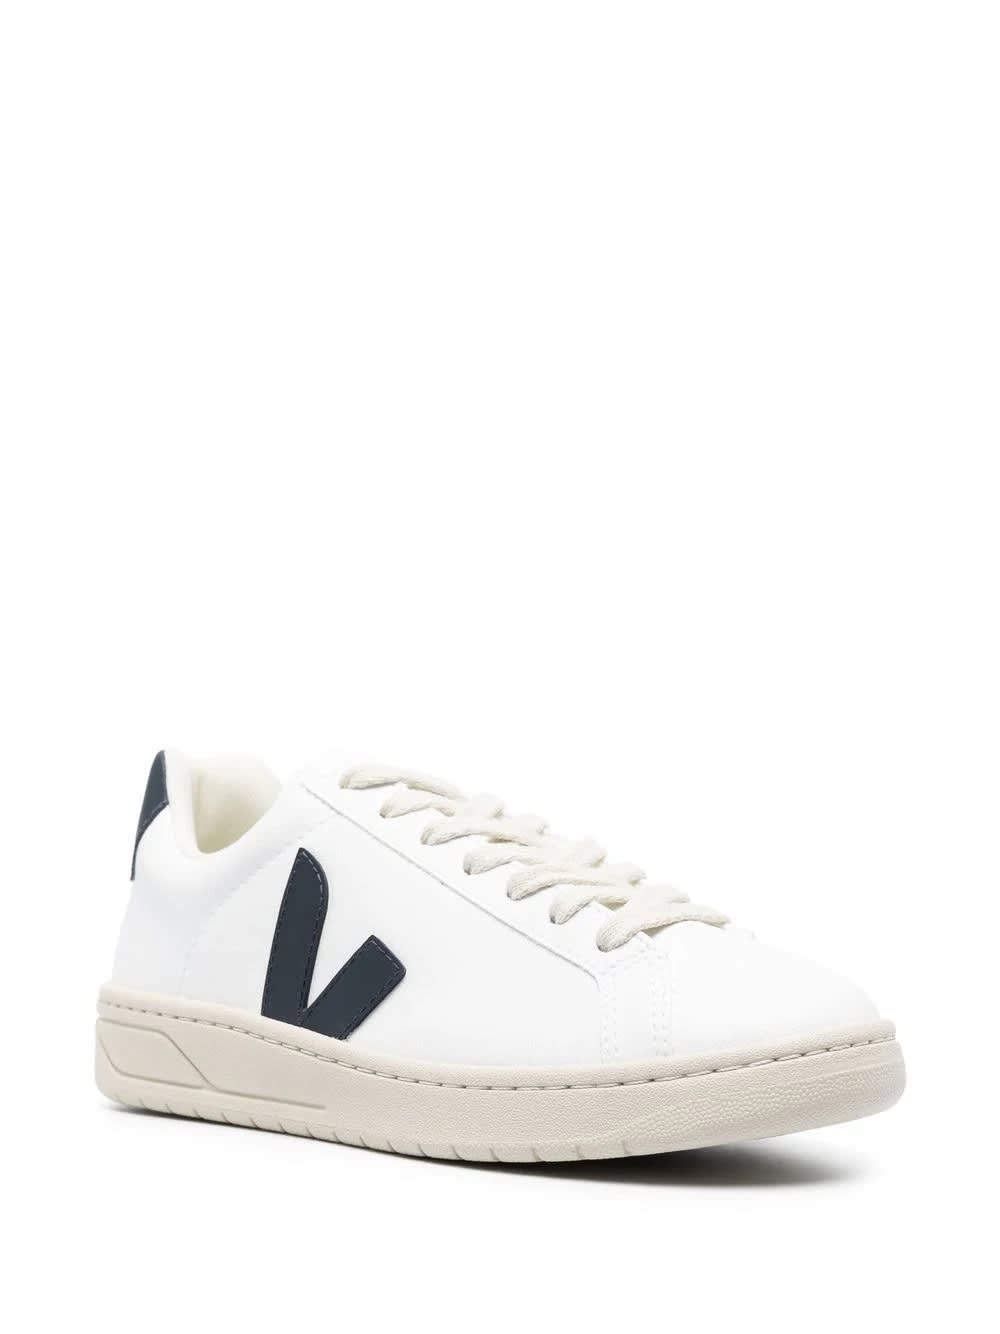 Shop Veja Urca Cwl Sneakers In White/navy Blue